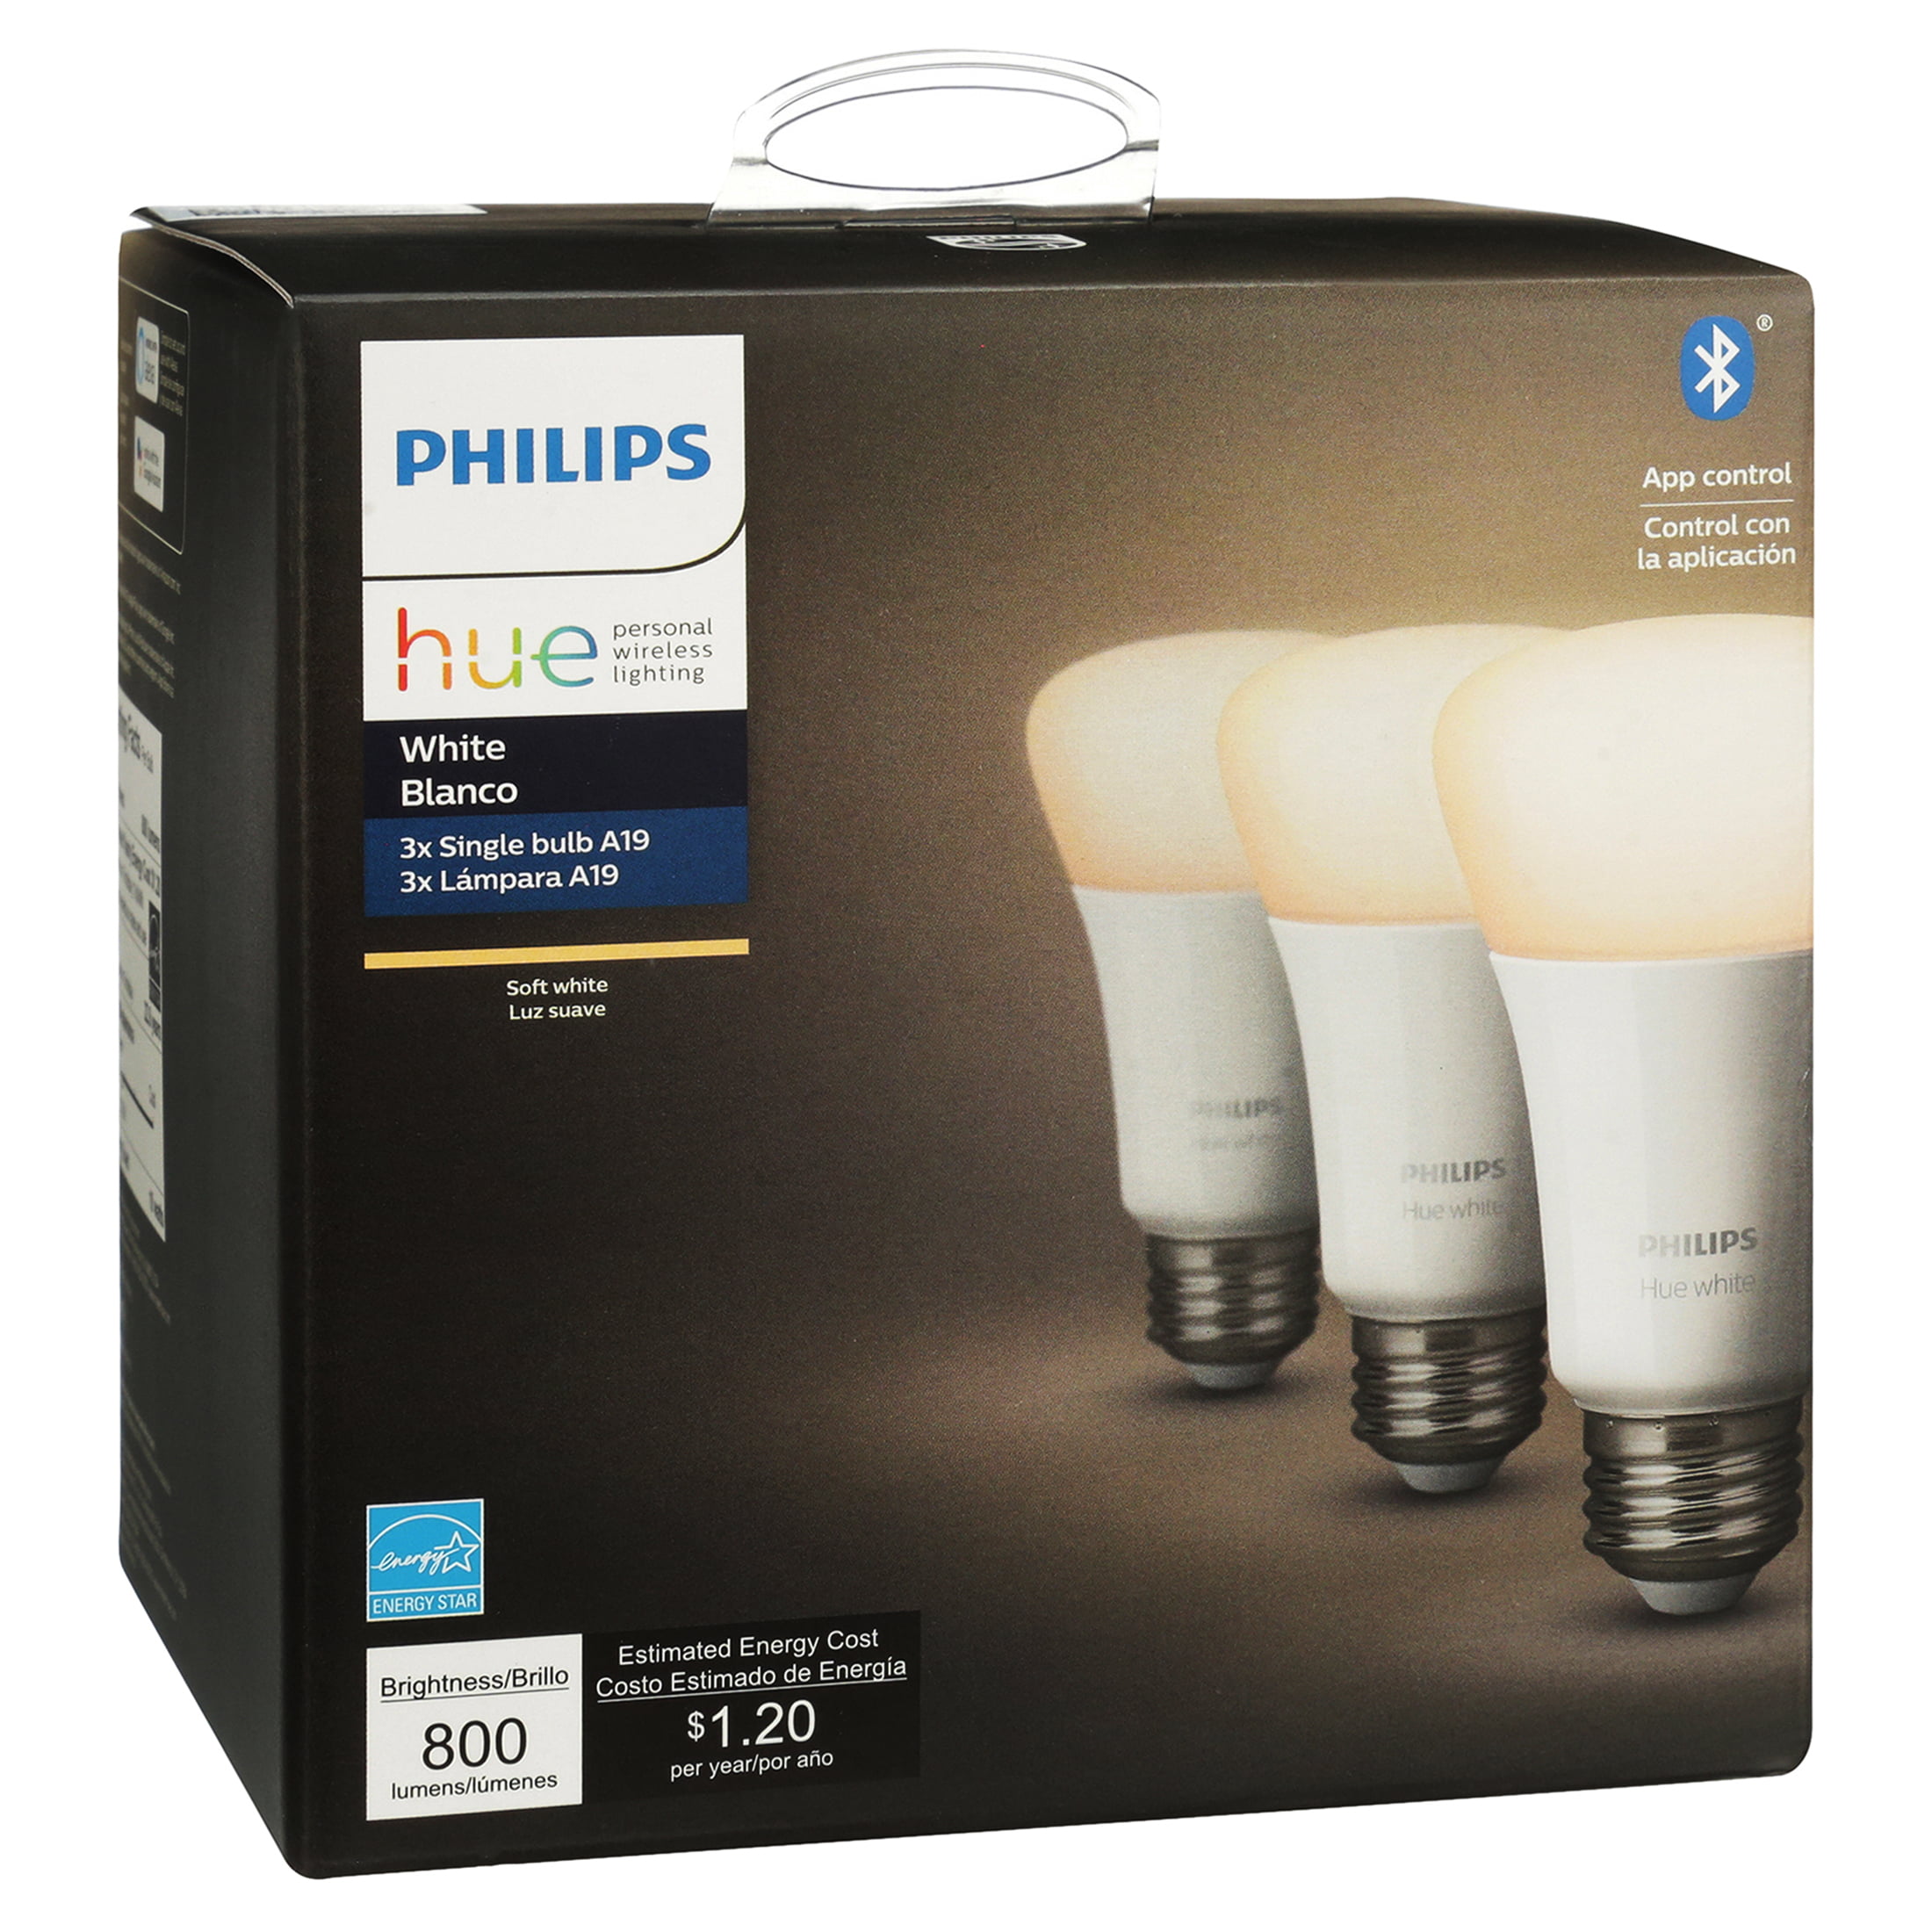 Philips Hue Personal Wireless Lighting 